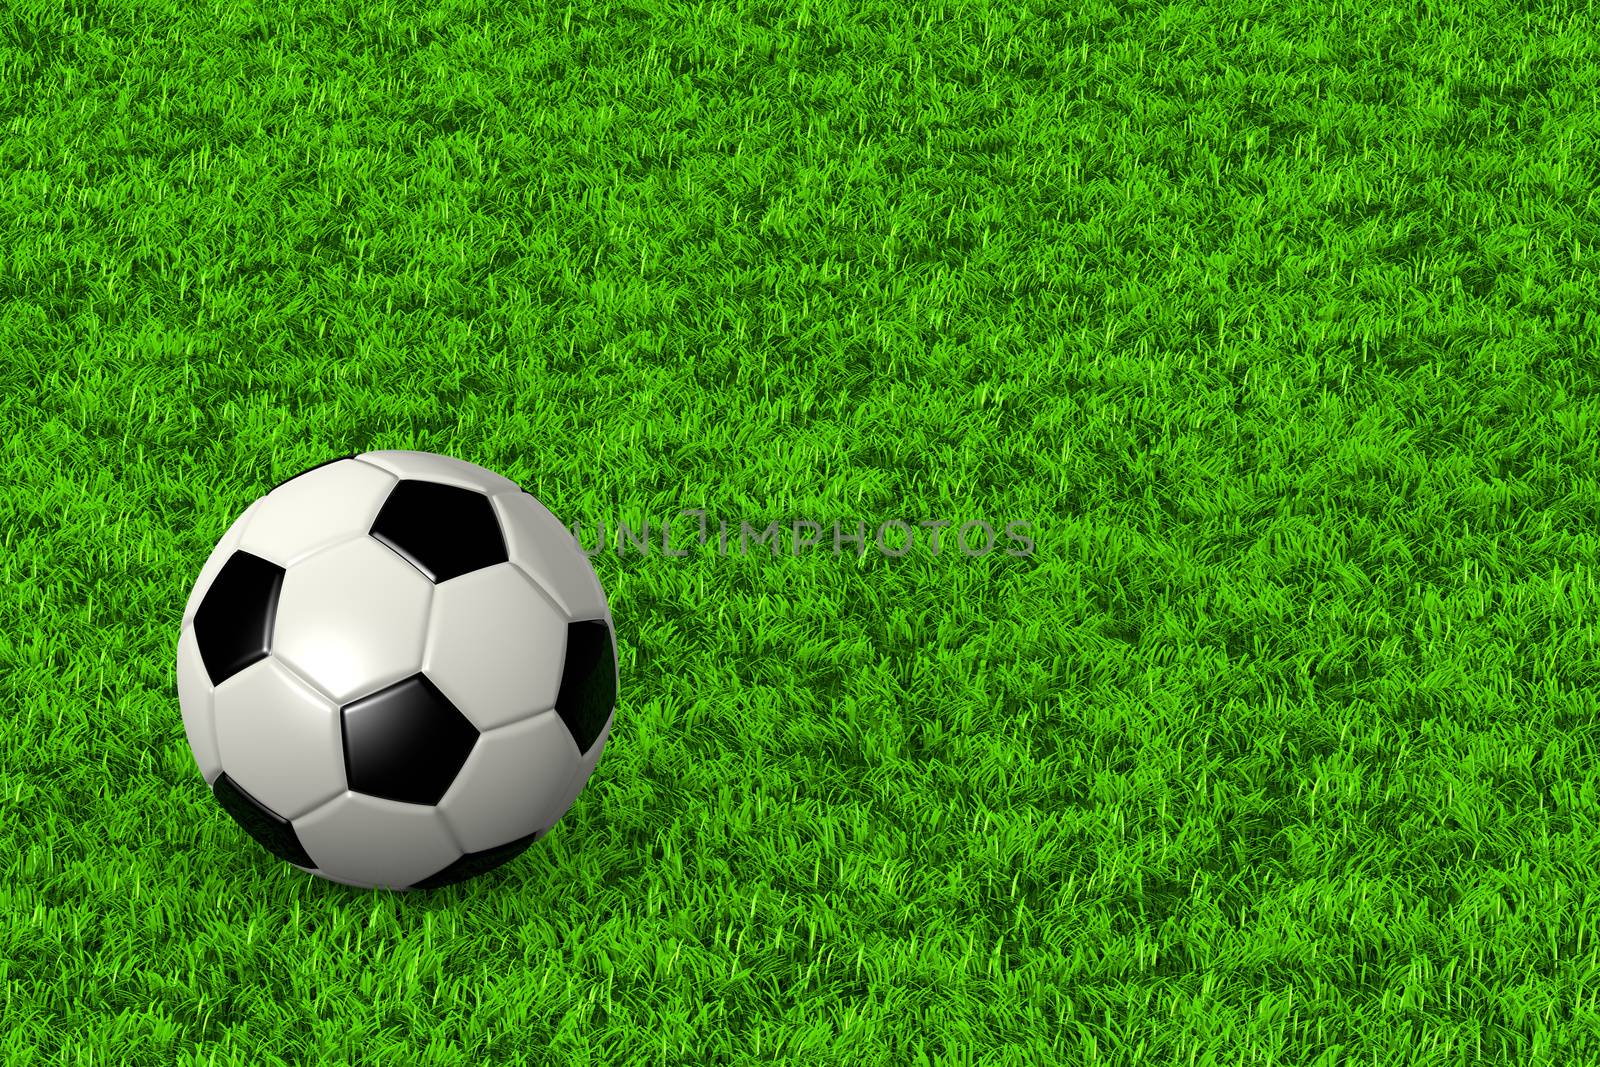 Soccer Ball on Grass Field by make